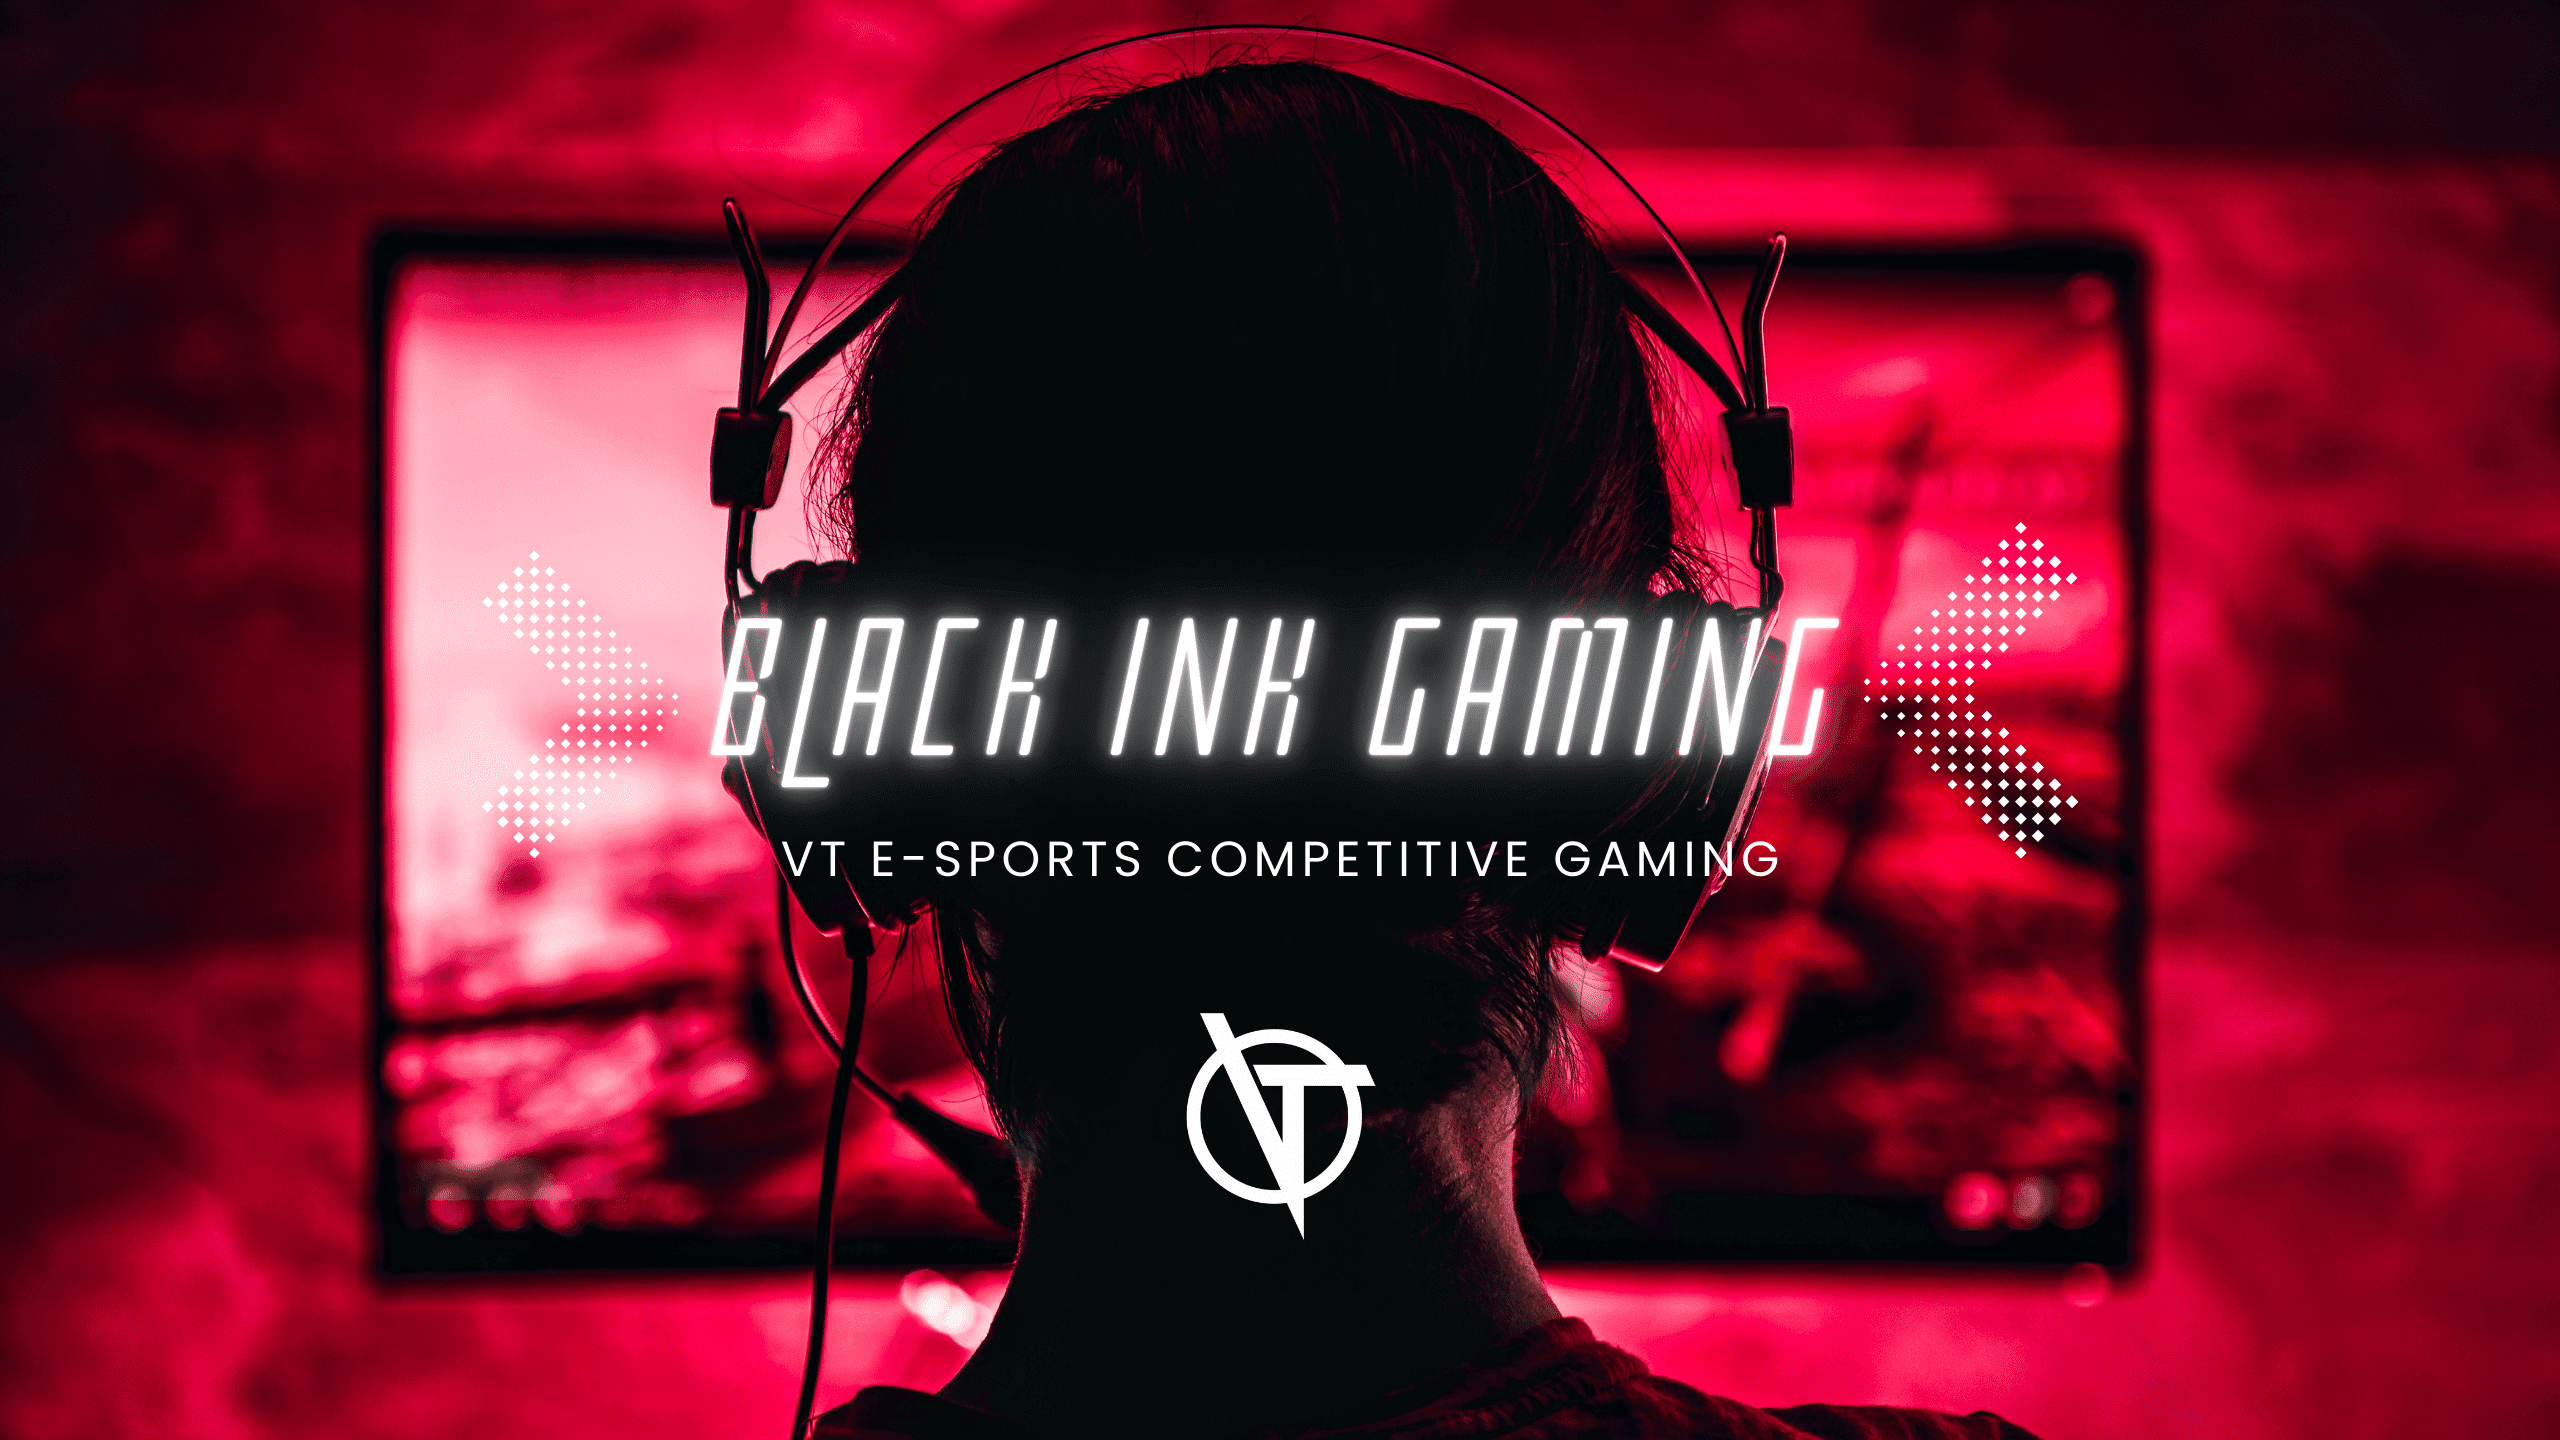 Meet VT E-Sports Team, Black Ink Gaming